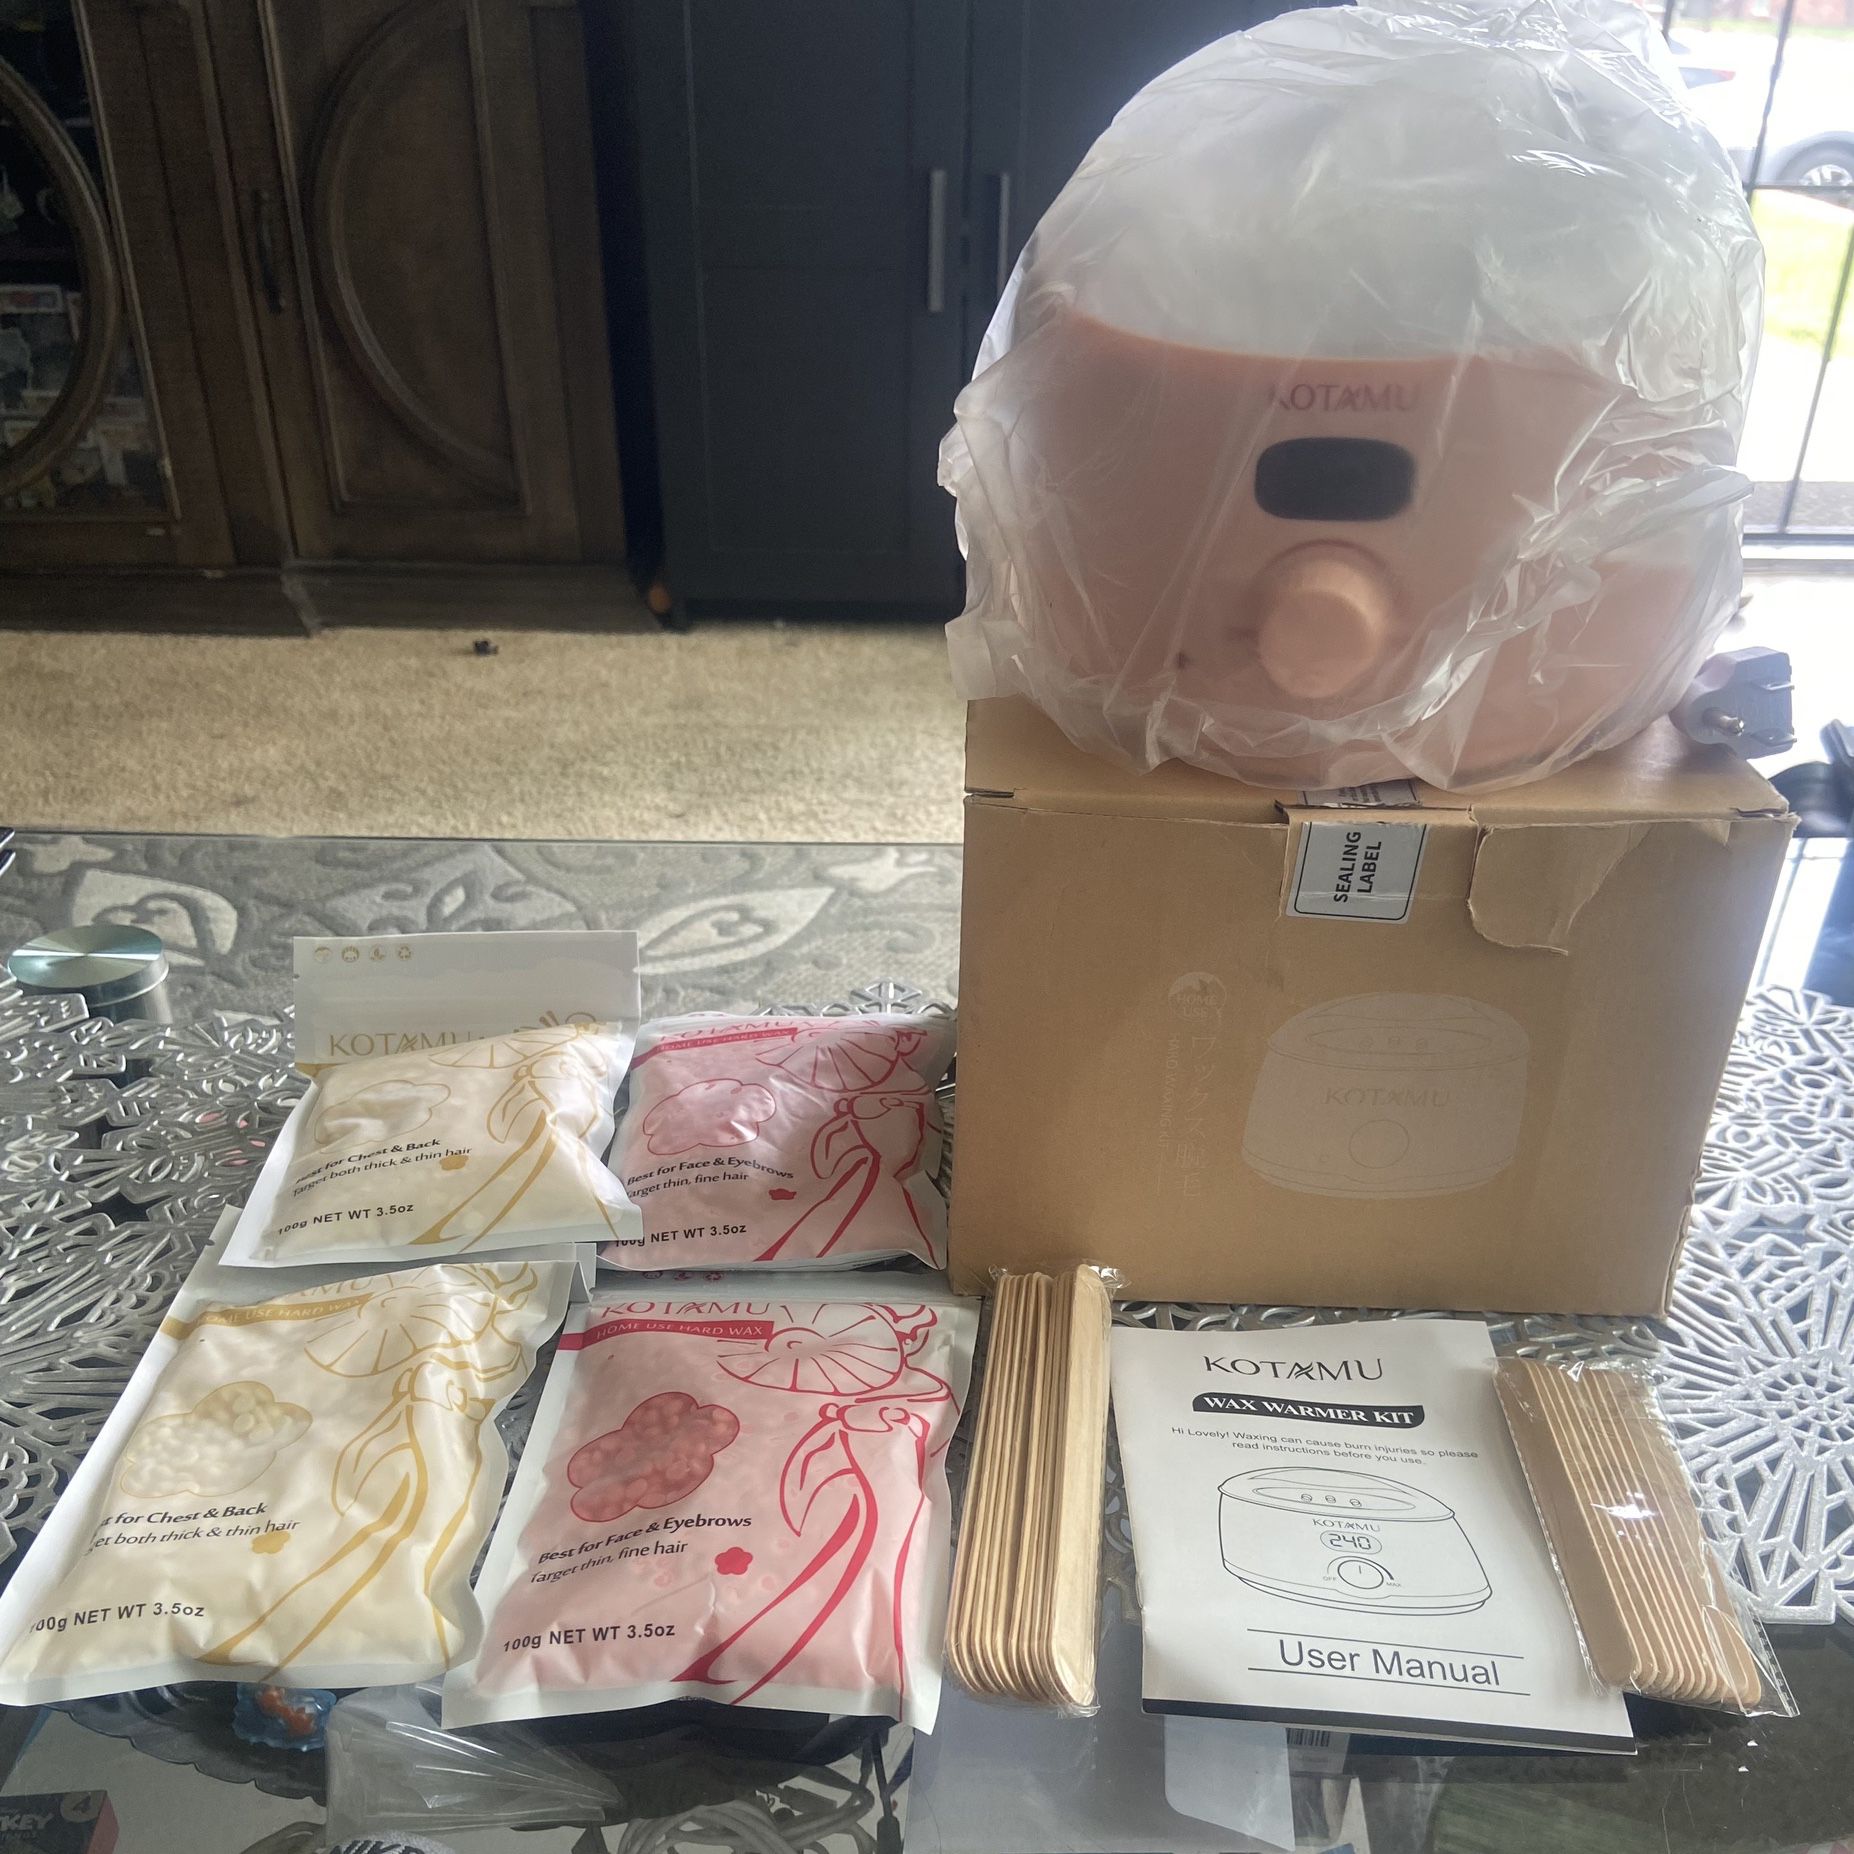  KOTAMU Digital Wax Warmer Kit for Hair Removal At Home